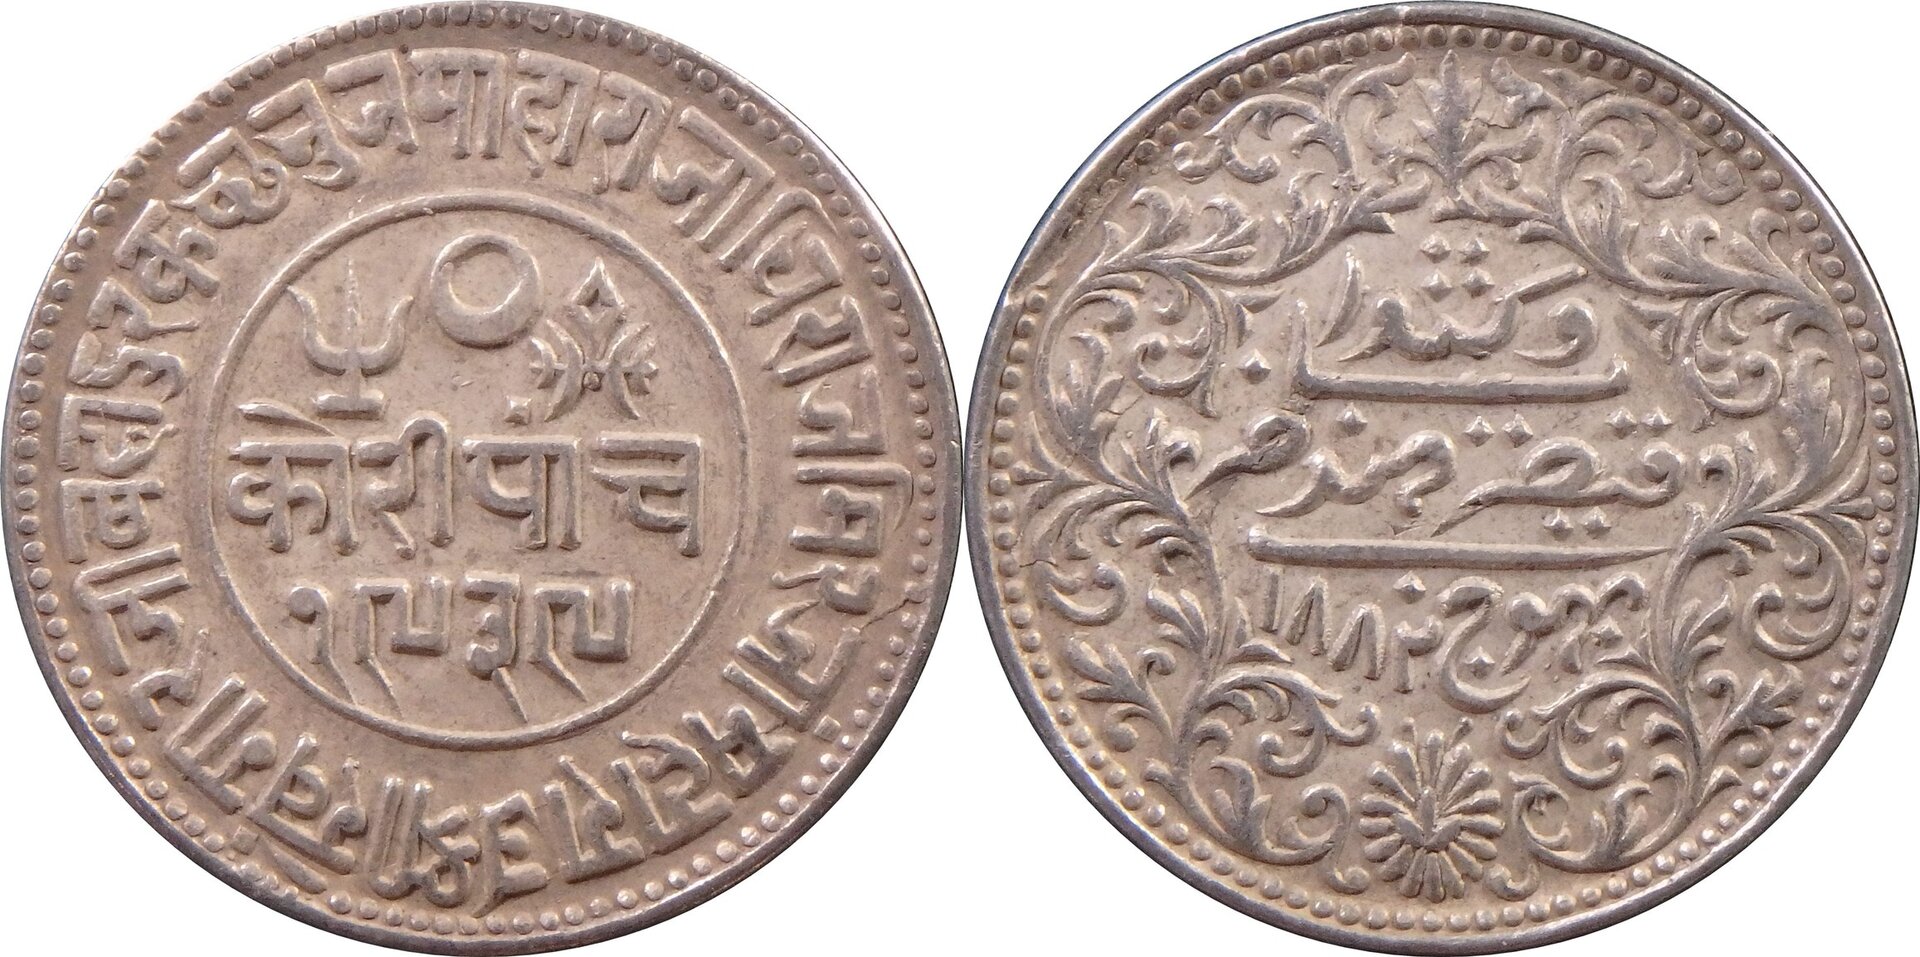 1882 Kutch-Bhuj 5 k (91).jpg